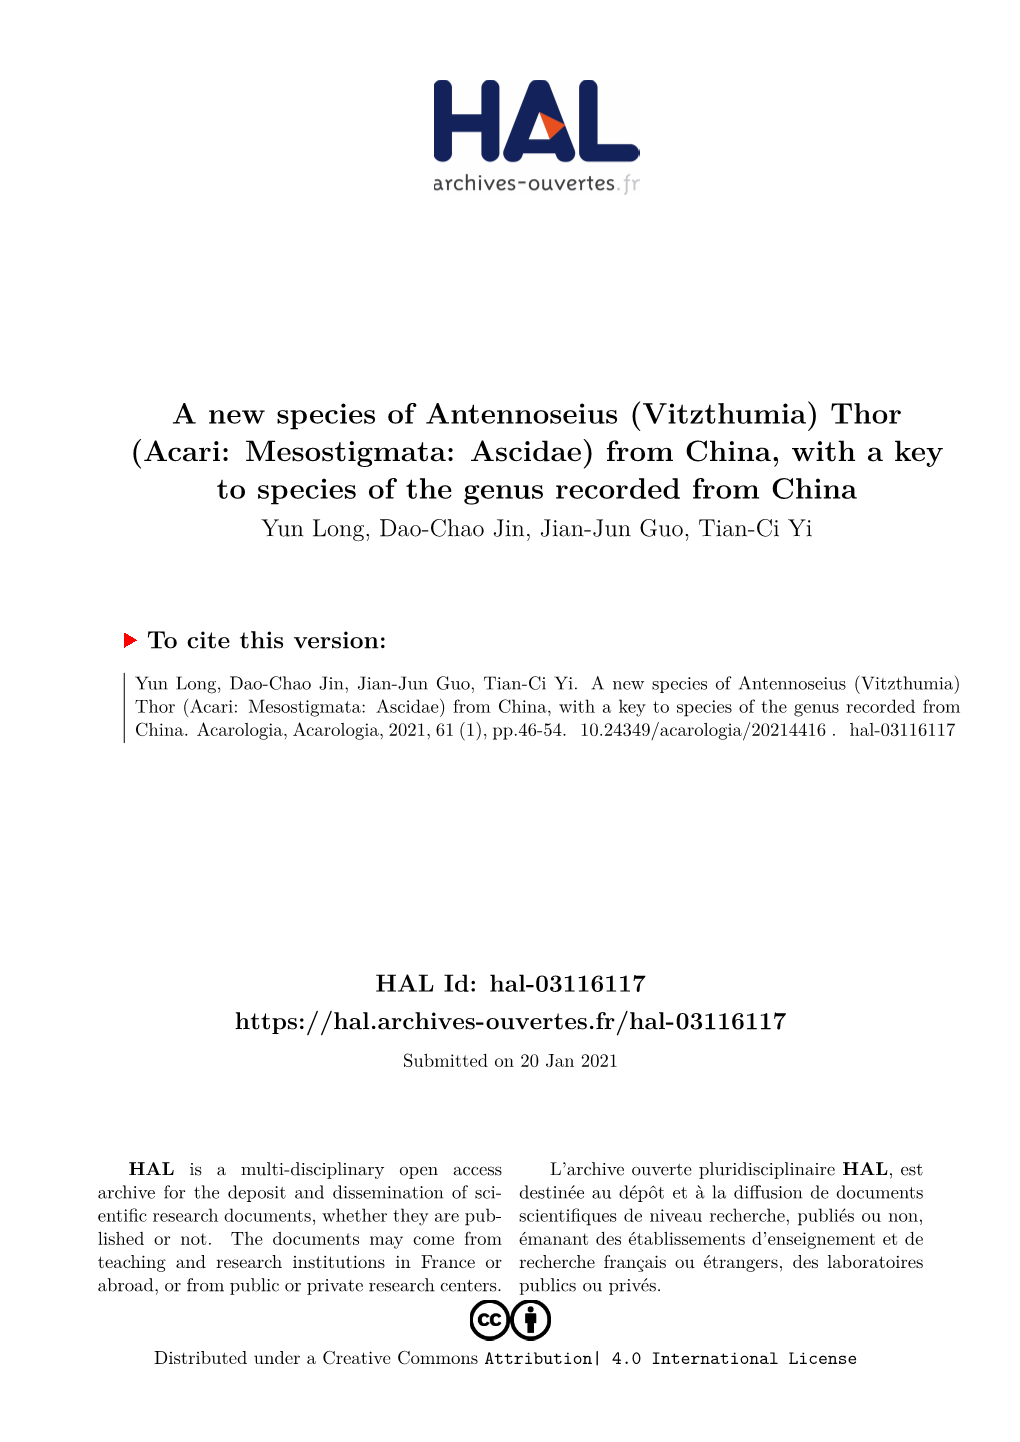 A New Species of Antennoseius (Vitzthumia